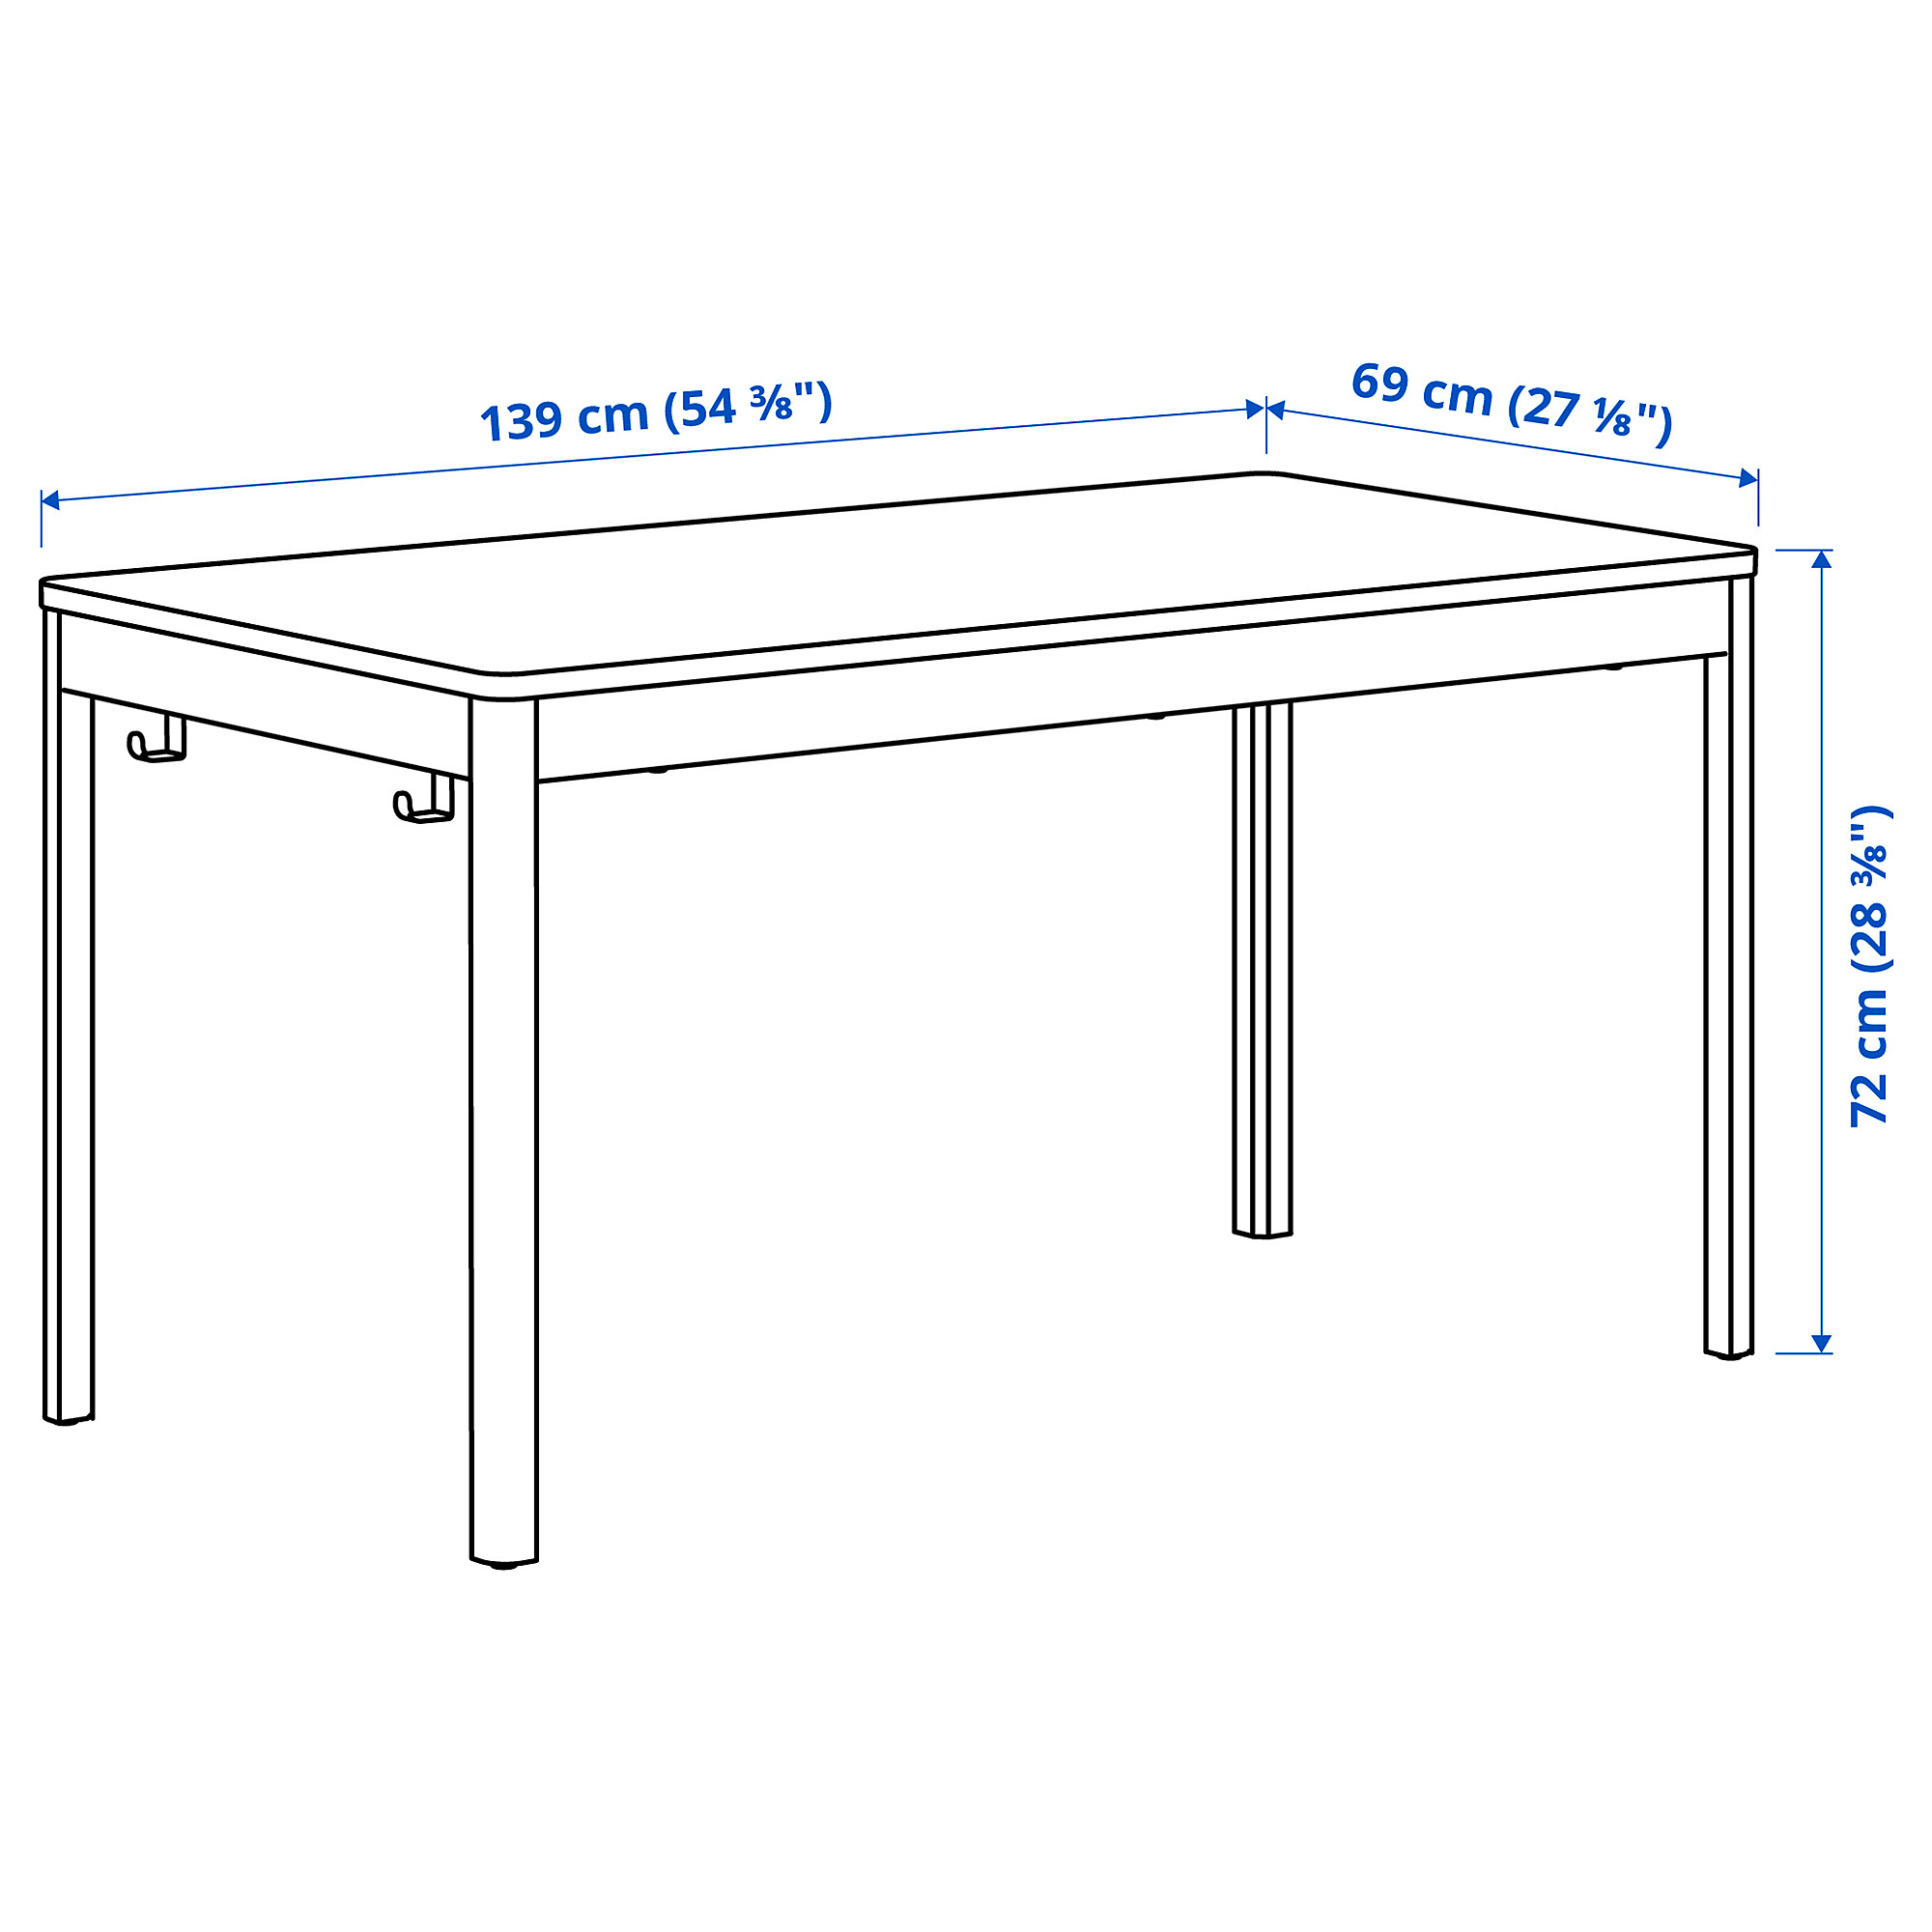 IDÅSEN underframe for table top